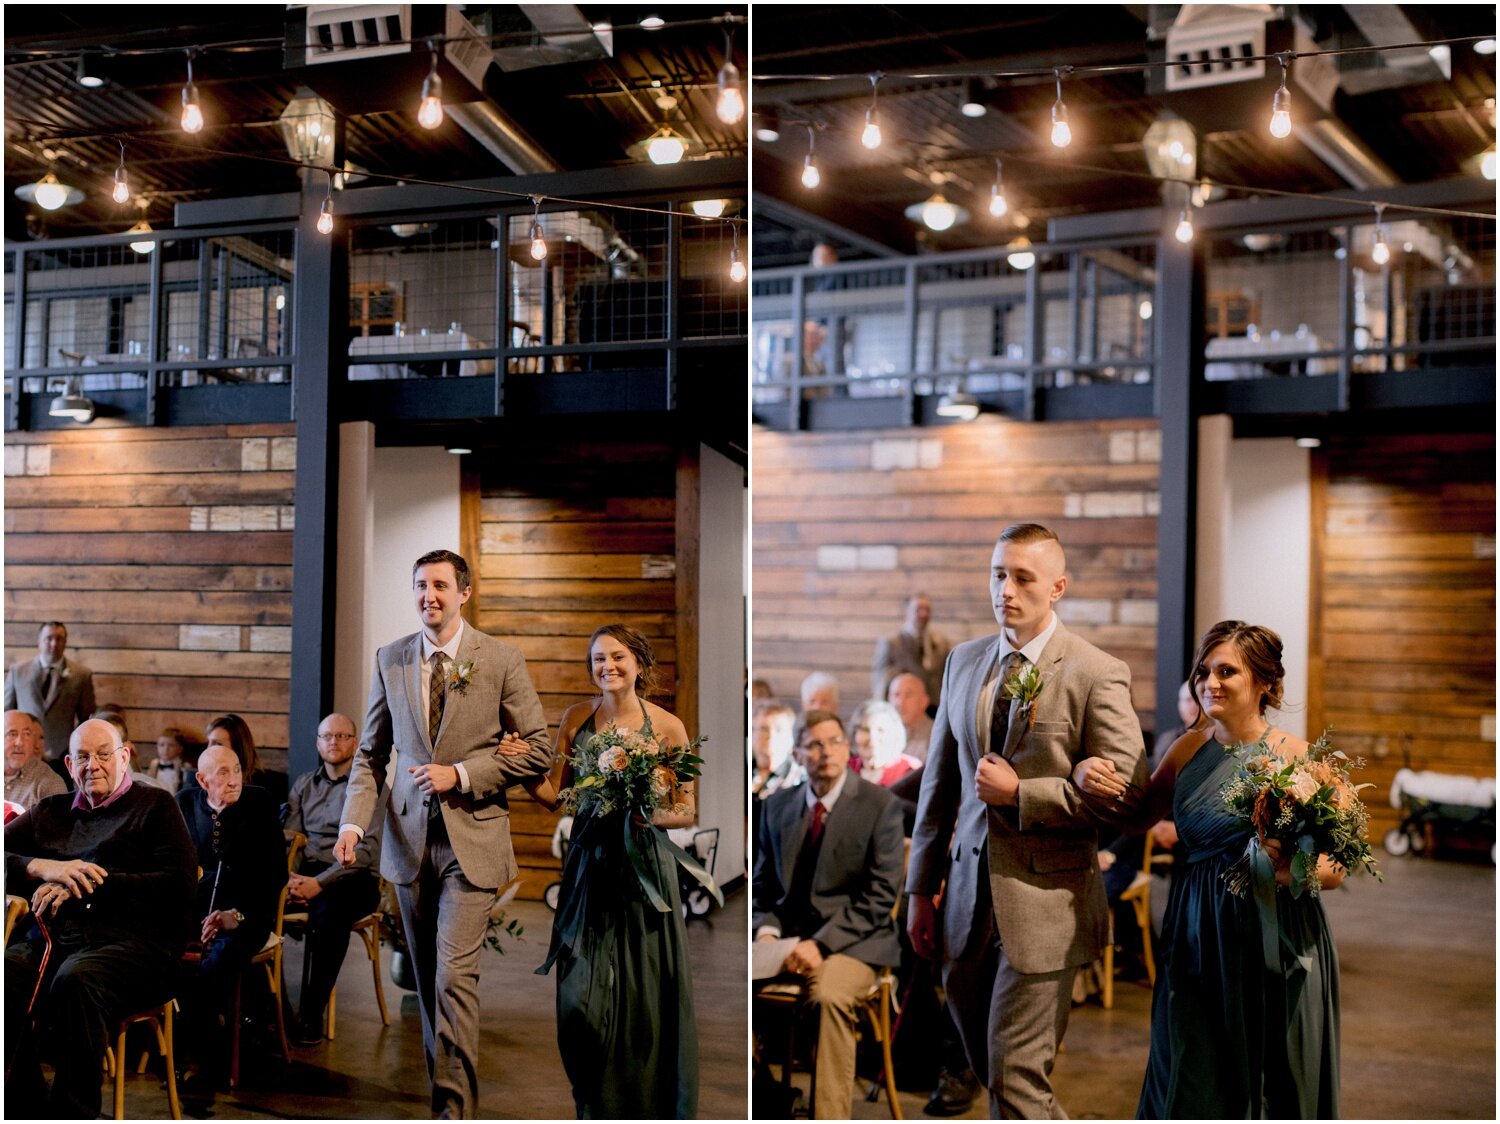 Andrew Ferren Photography - Des Moines Iowa Wedding Photographer - Destination - Engagement - Videography - Videographer - The River Center35.jpg